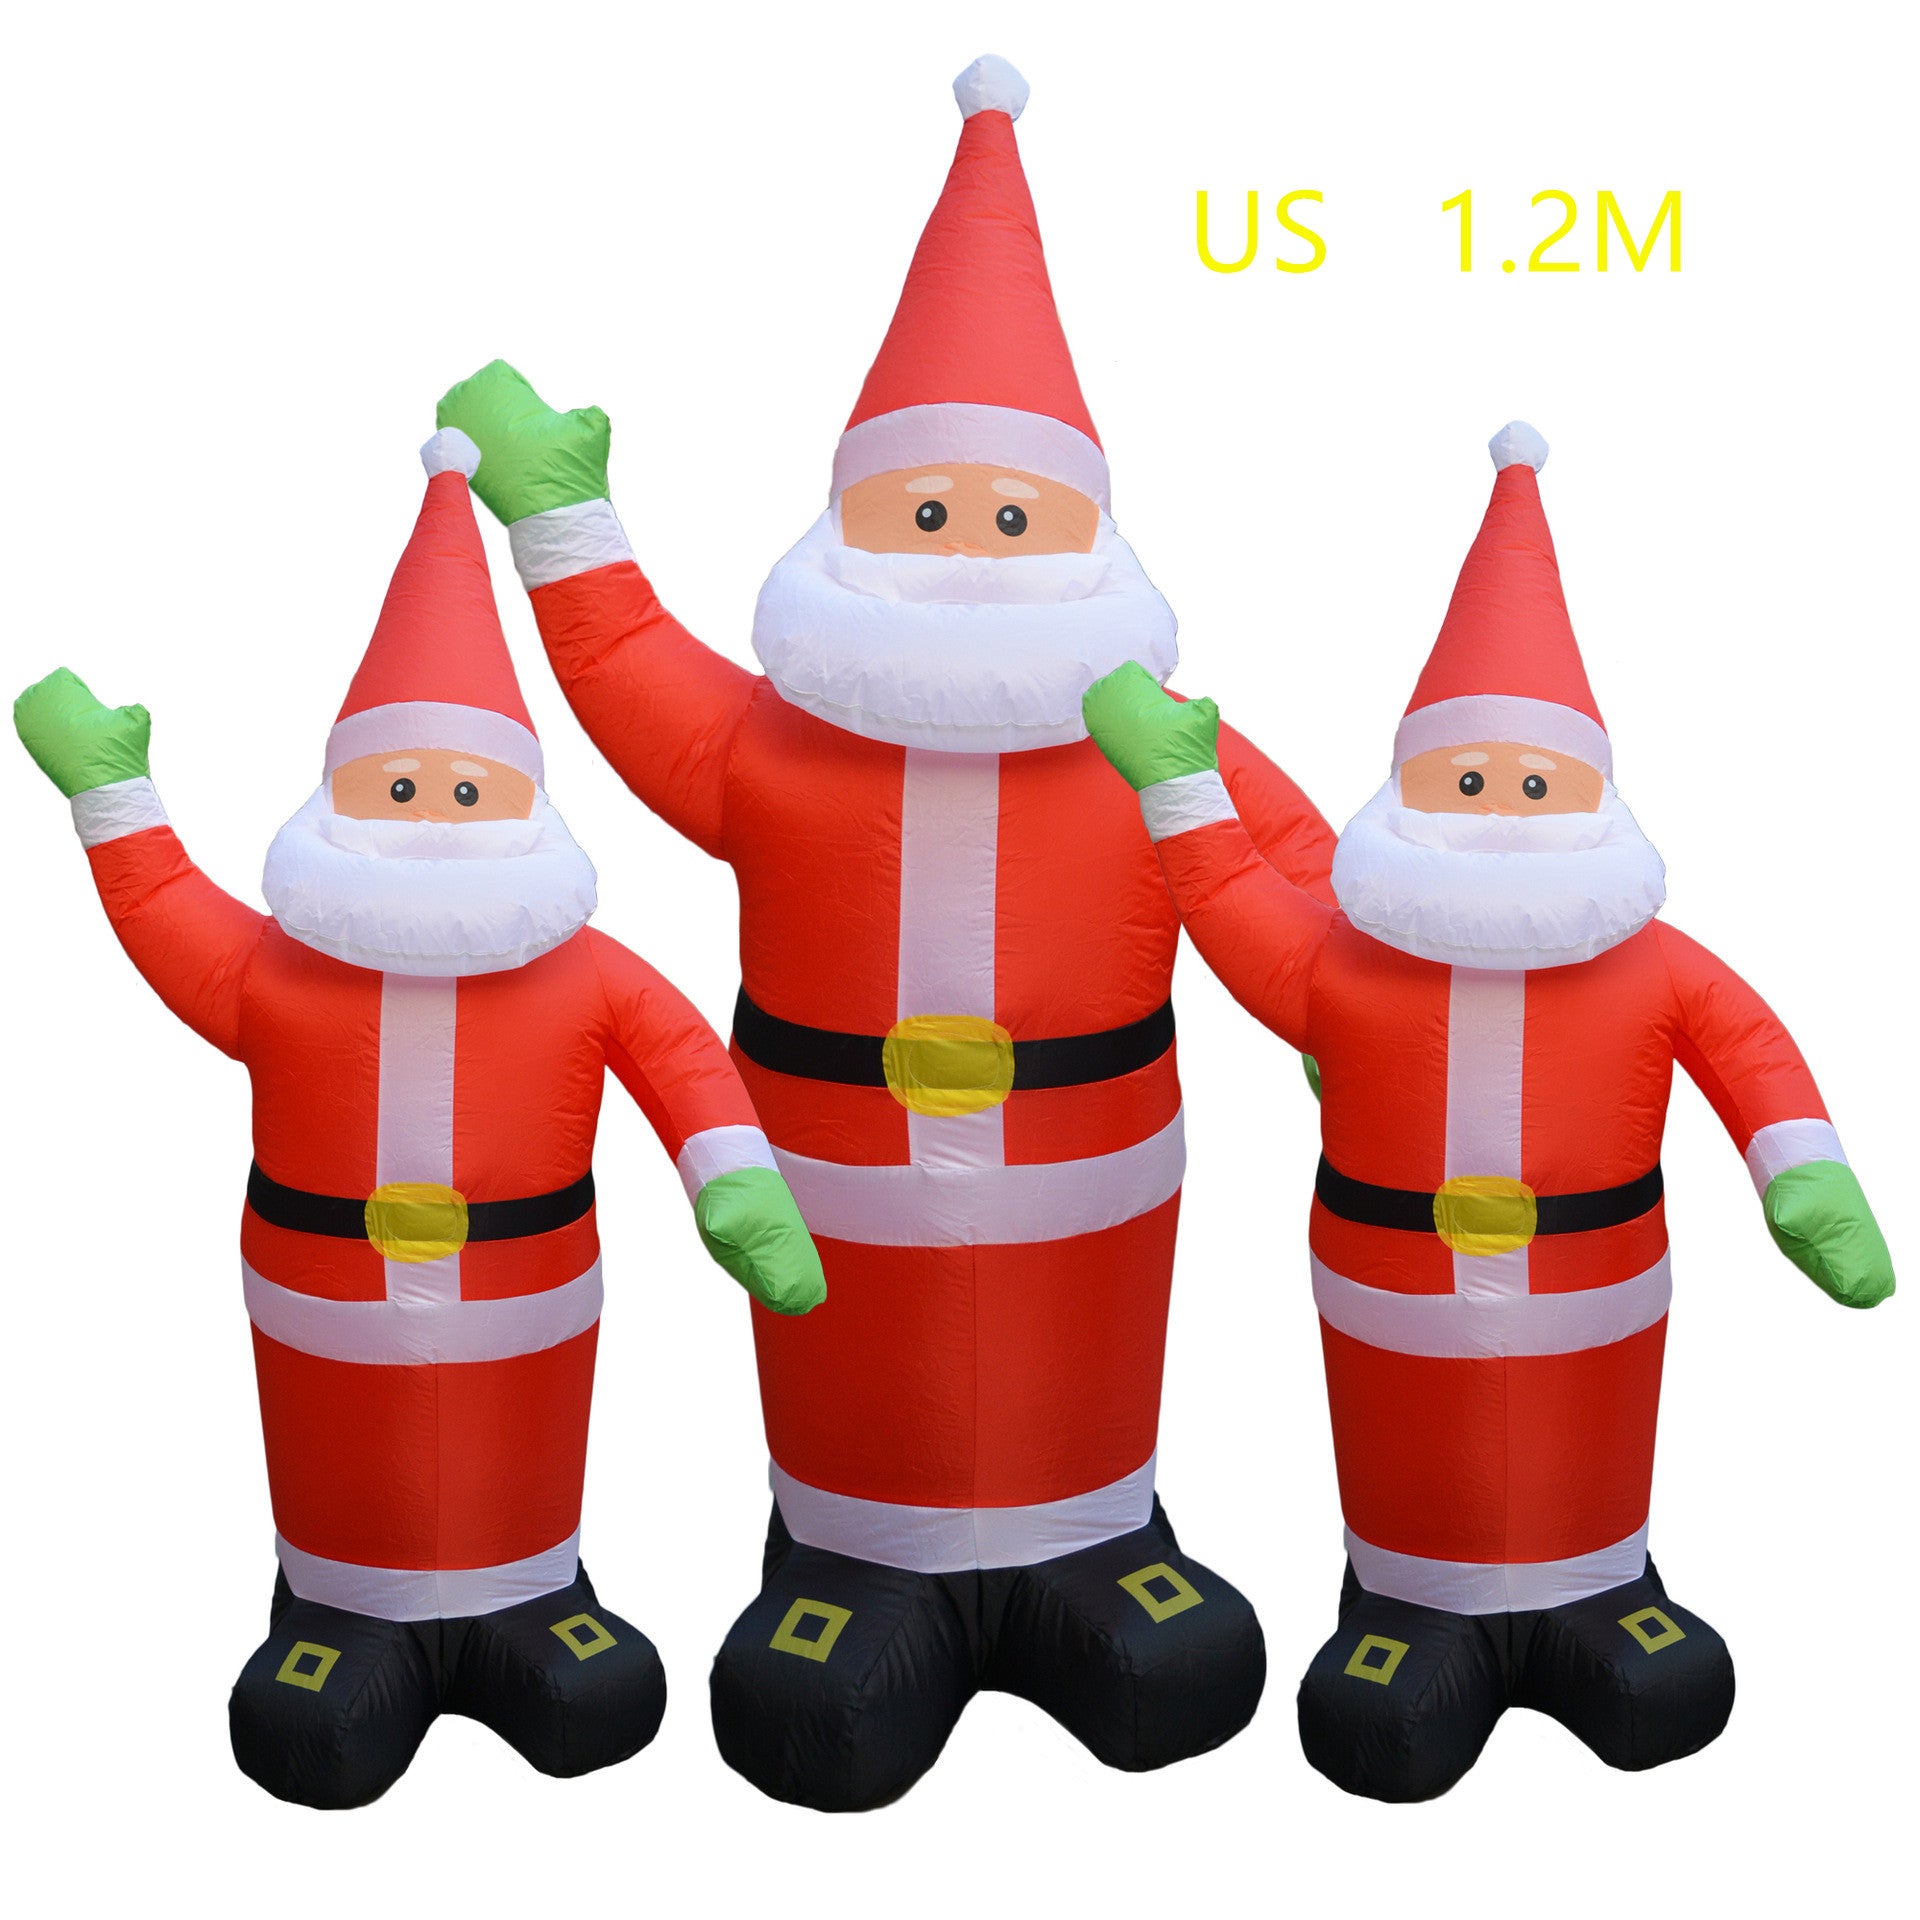 Electric inflatable Santa, Christmas Inflatable, Christmas Inflatable Decoration, Holiday Season Inflatable, Christmas inflatables, Christmas inflatables on Sale, Christmas inflatables 2022, Christmas inflatables lowes, Christmas inflatables wholesale